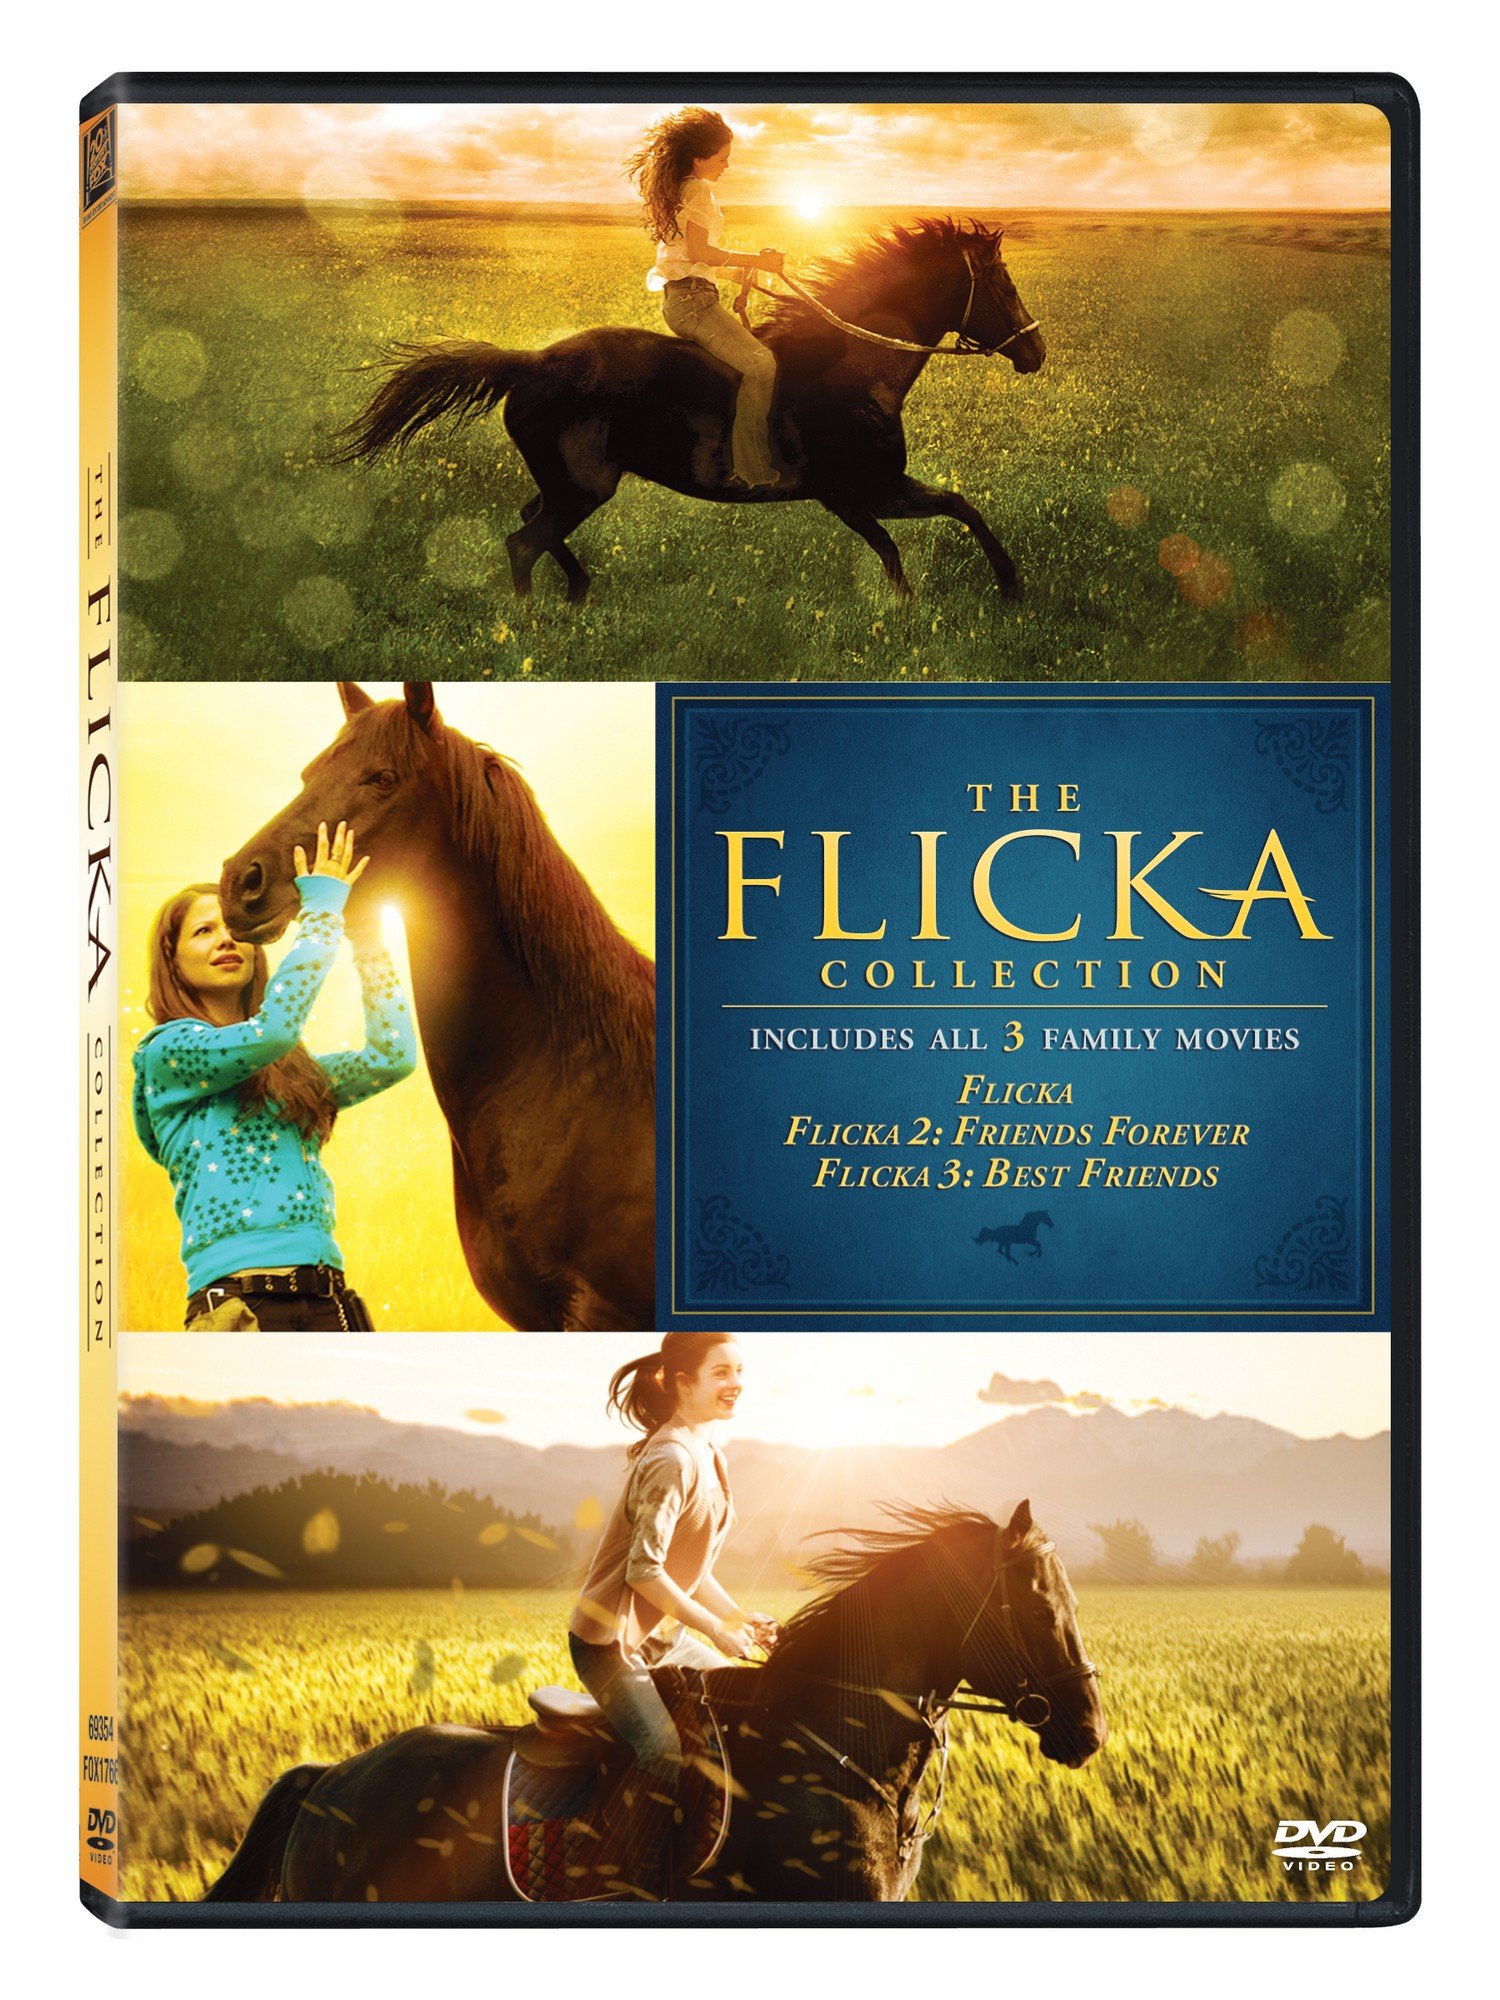 the-flicka-collection-3-movies-flicka-flicka-2-friends-forever-flicka-3-best-friends-3-disc-box-set